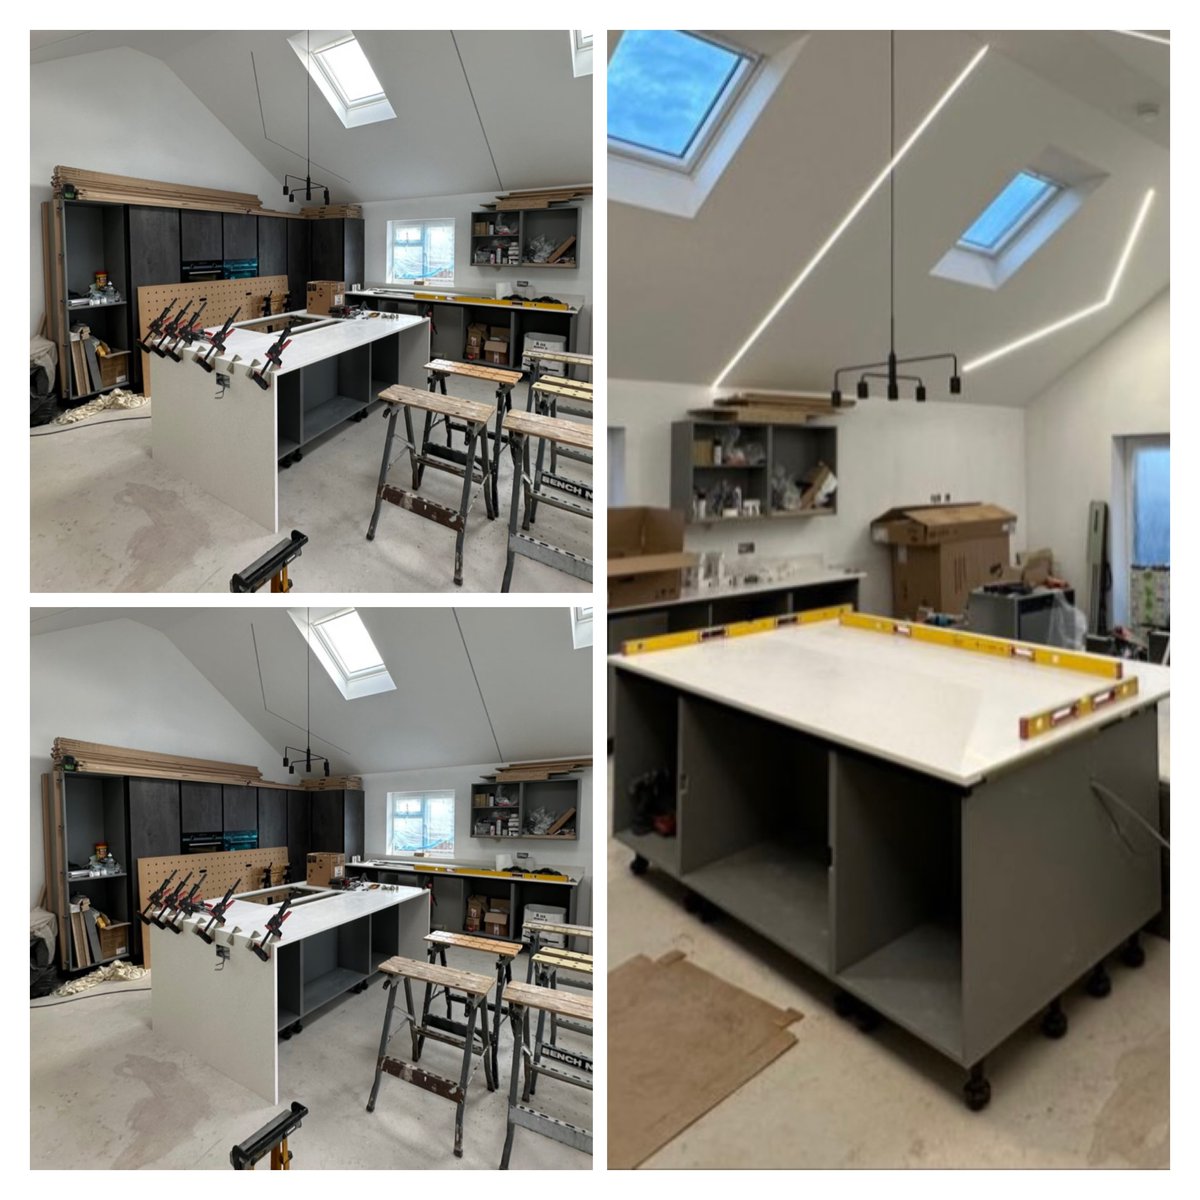 Solid surface worktop installation part of a kitchen project for @jlawcarpentry 👌
#kitchens #kitchenworktops #solidsurfaceworktops #essex